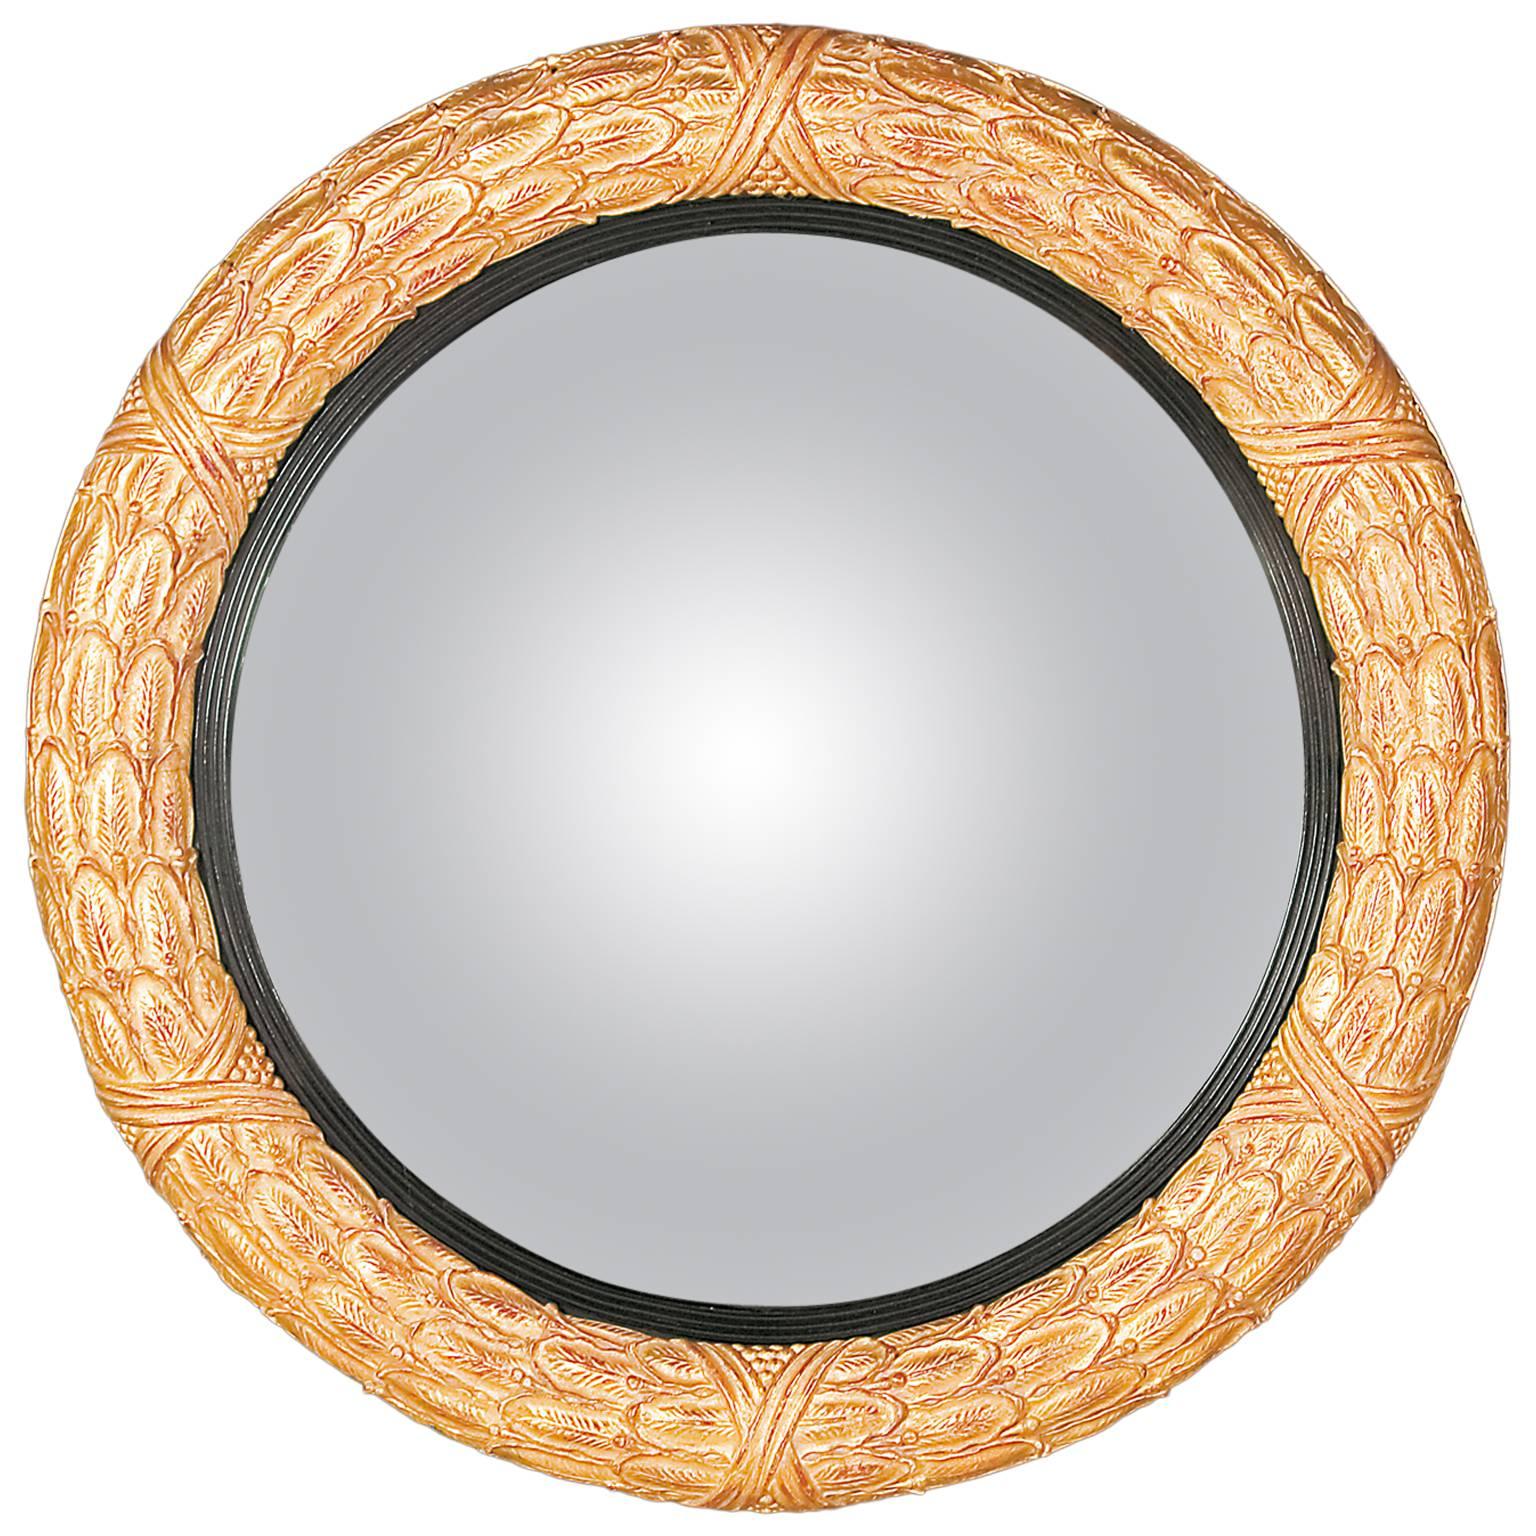 Laurel Convex Mirror in the Regency manner For Sale